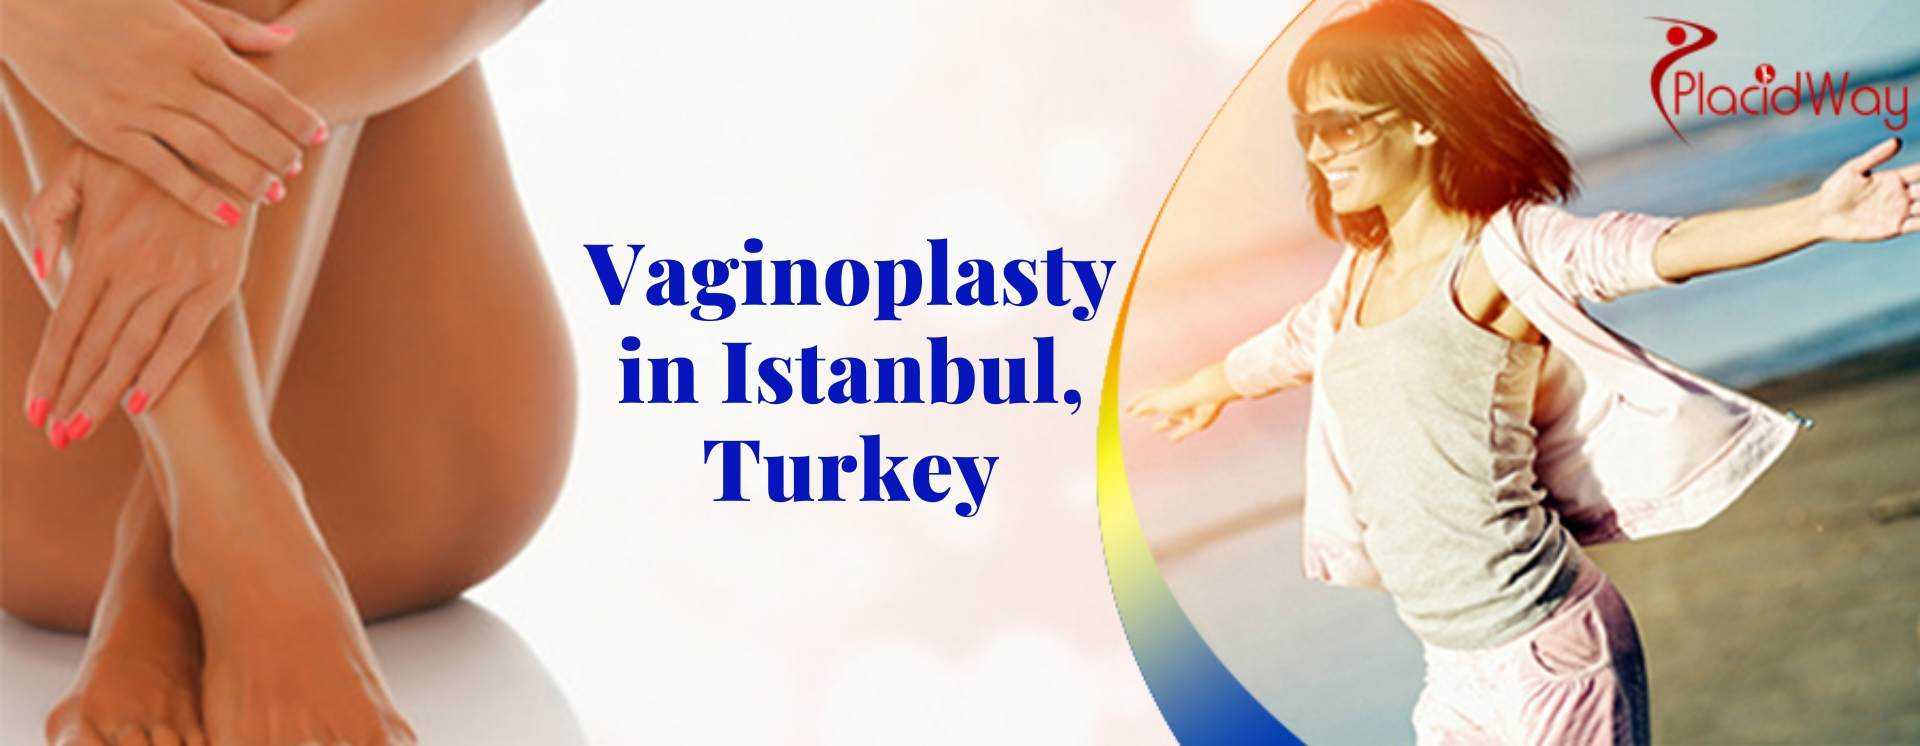 Vaginoplasty in Istanbul, Turkey